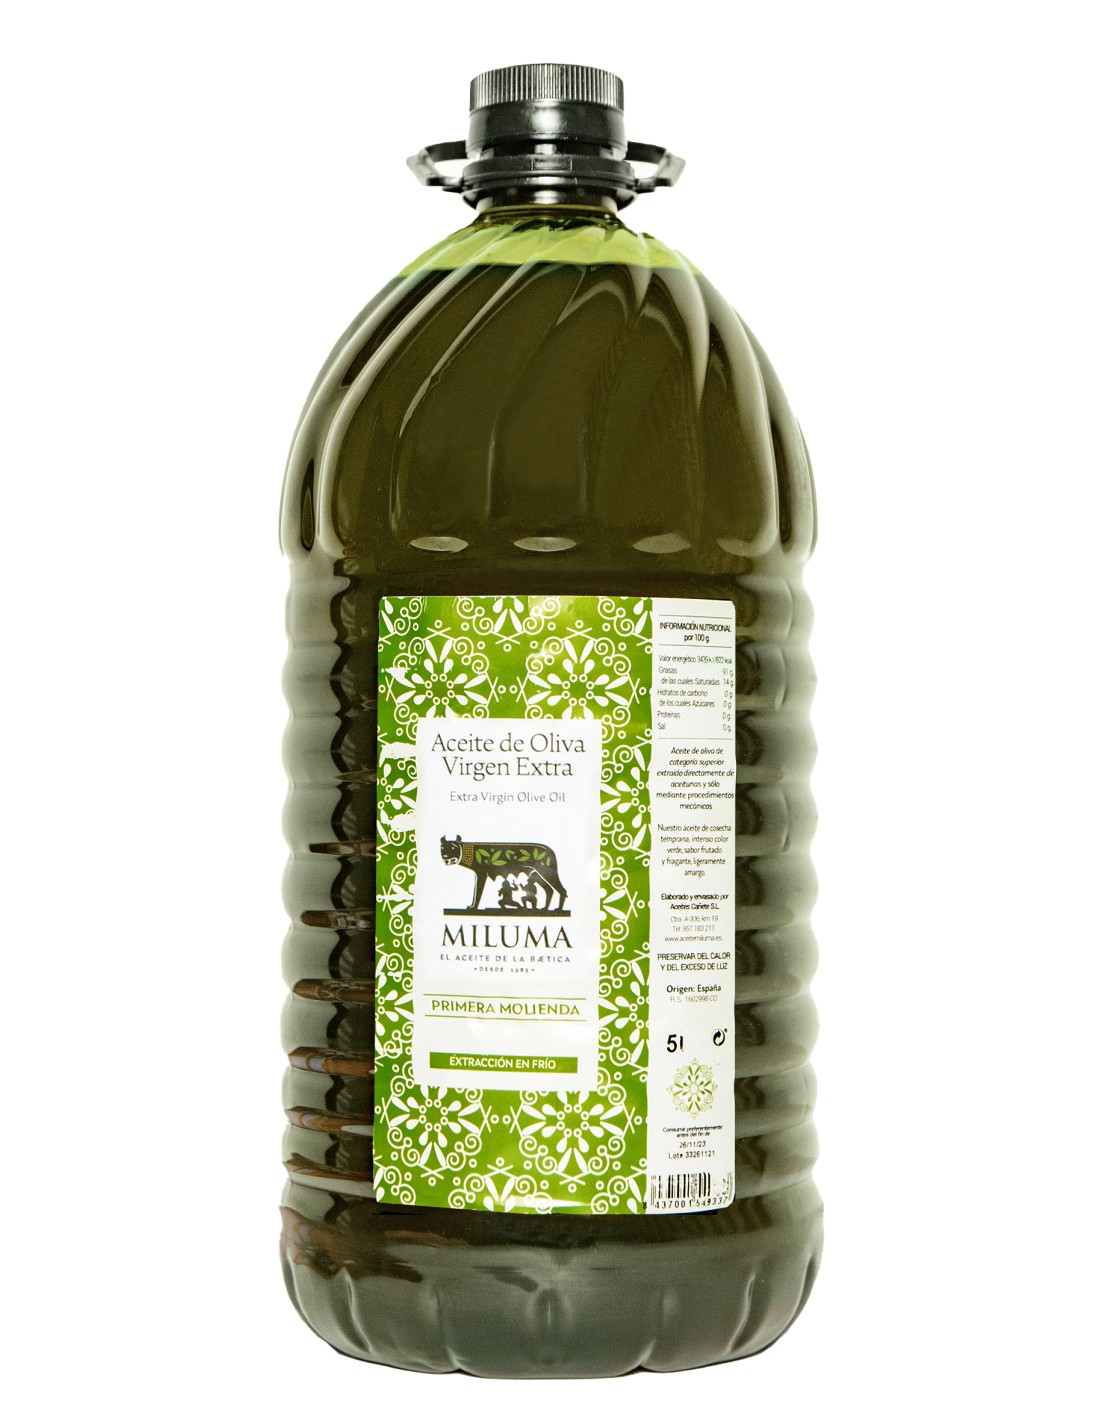 Aceite de oliva virgen extra ecológico Carrefour Bio 500 ml.